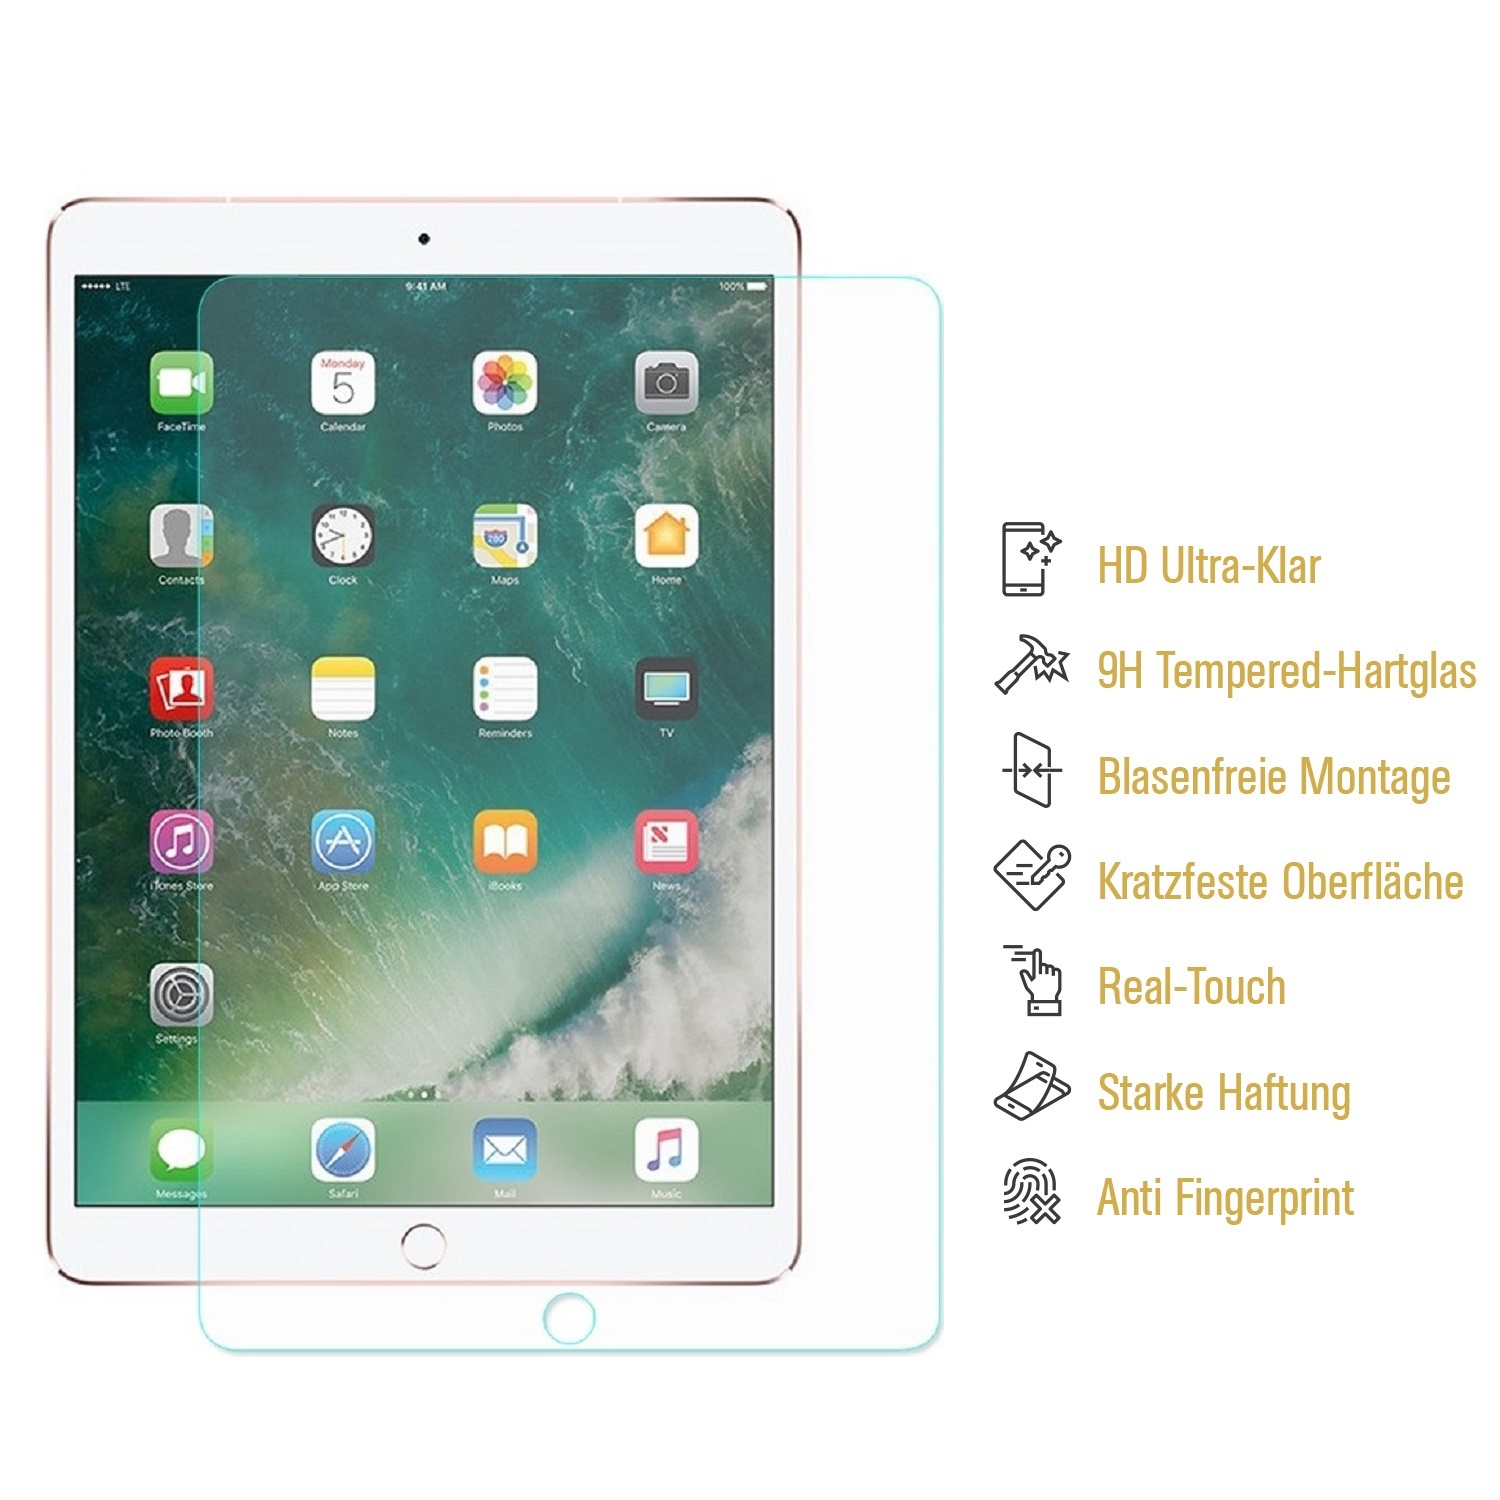 iPad 9H HD Displayschutzfolie(für Hartglas Pro PROTECTORKING KLAR Apple 6x 10.5) Schutzglas